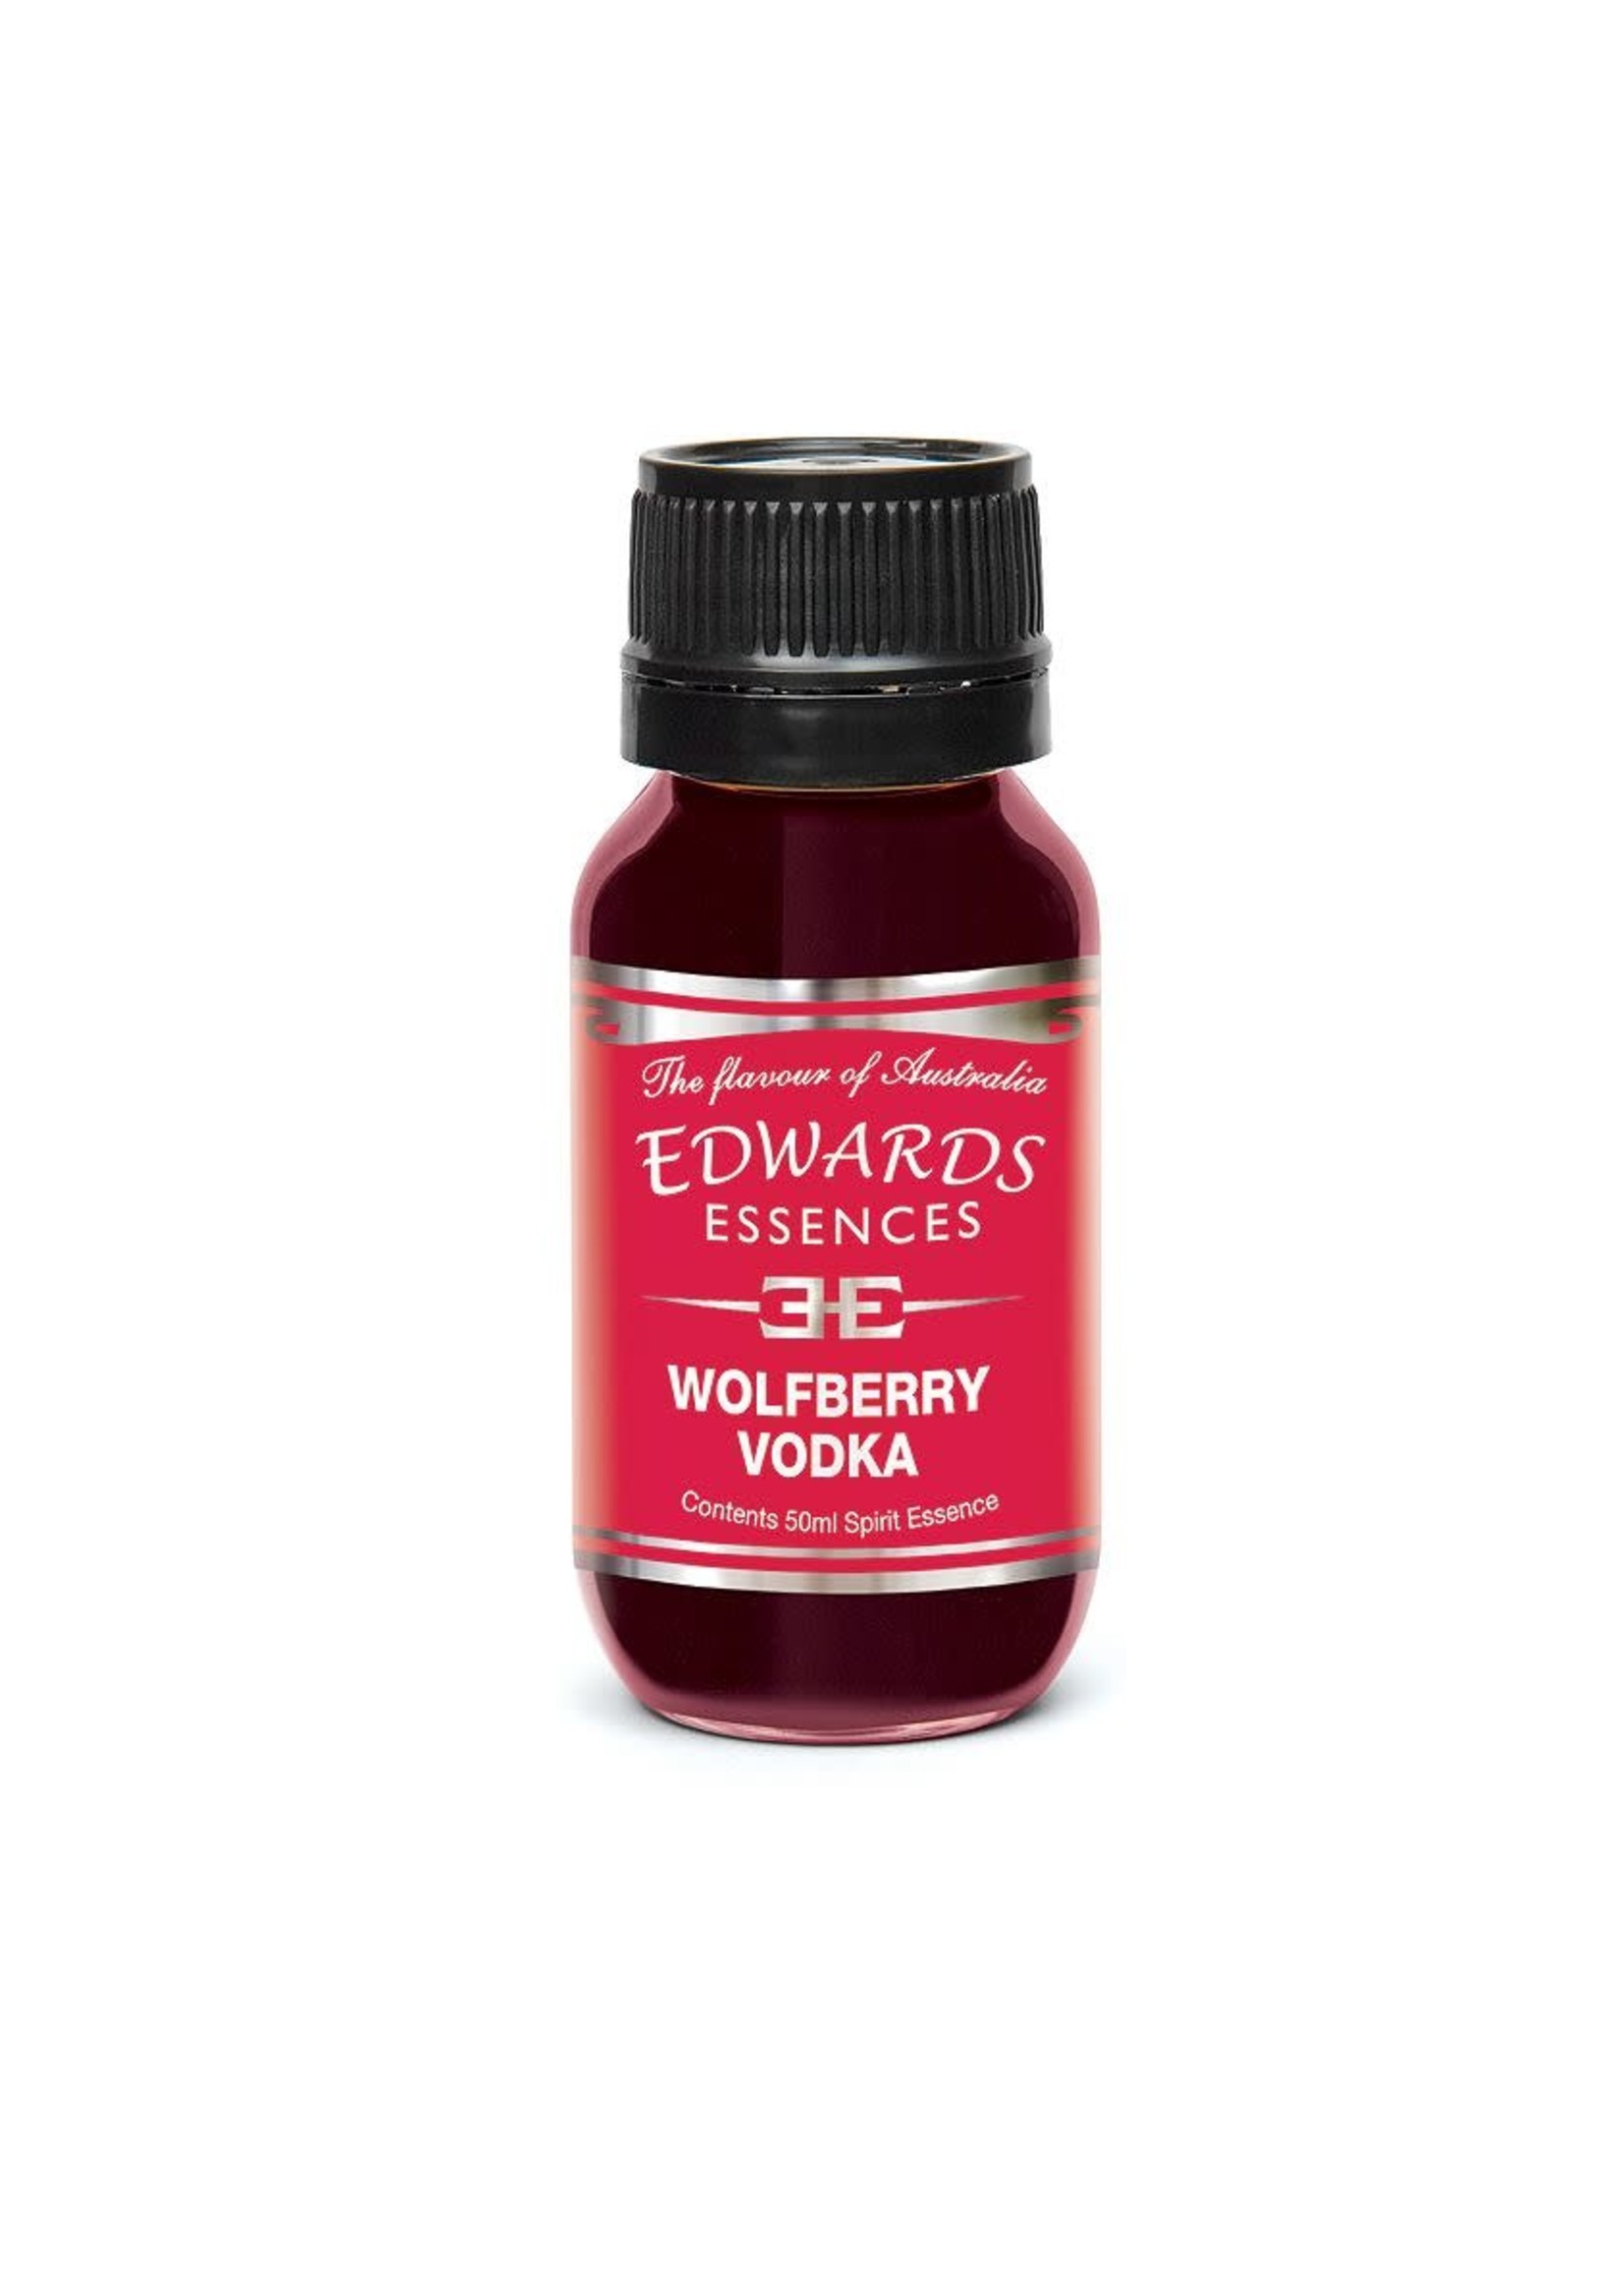 Edwards Essences Edwards Essences Wolfberry Vodka 50ml